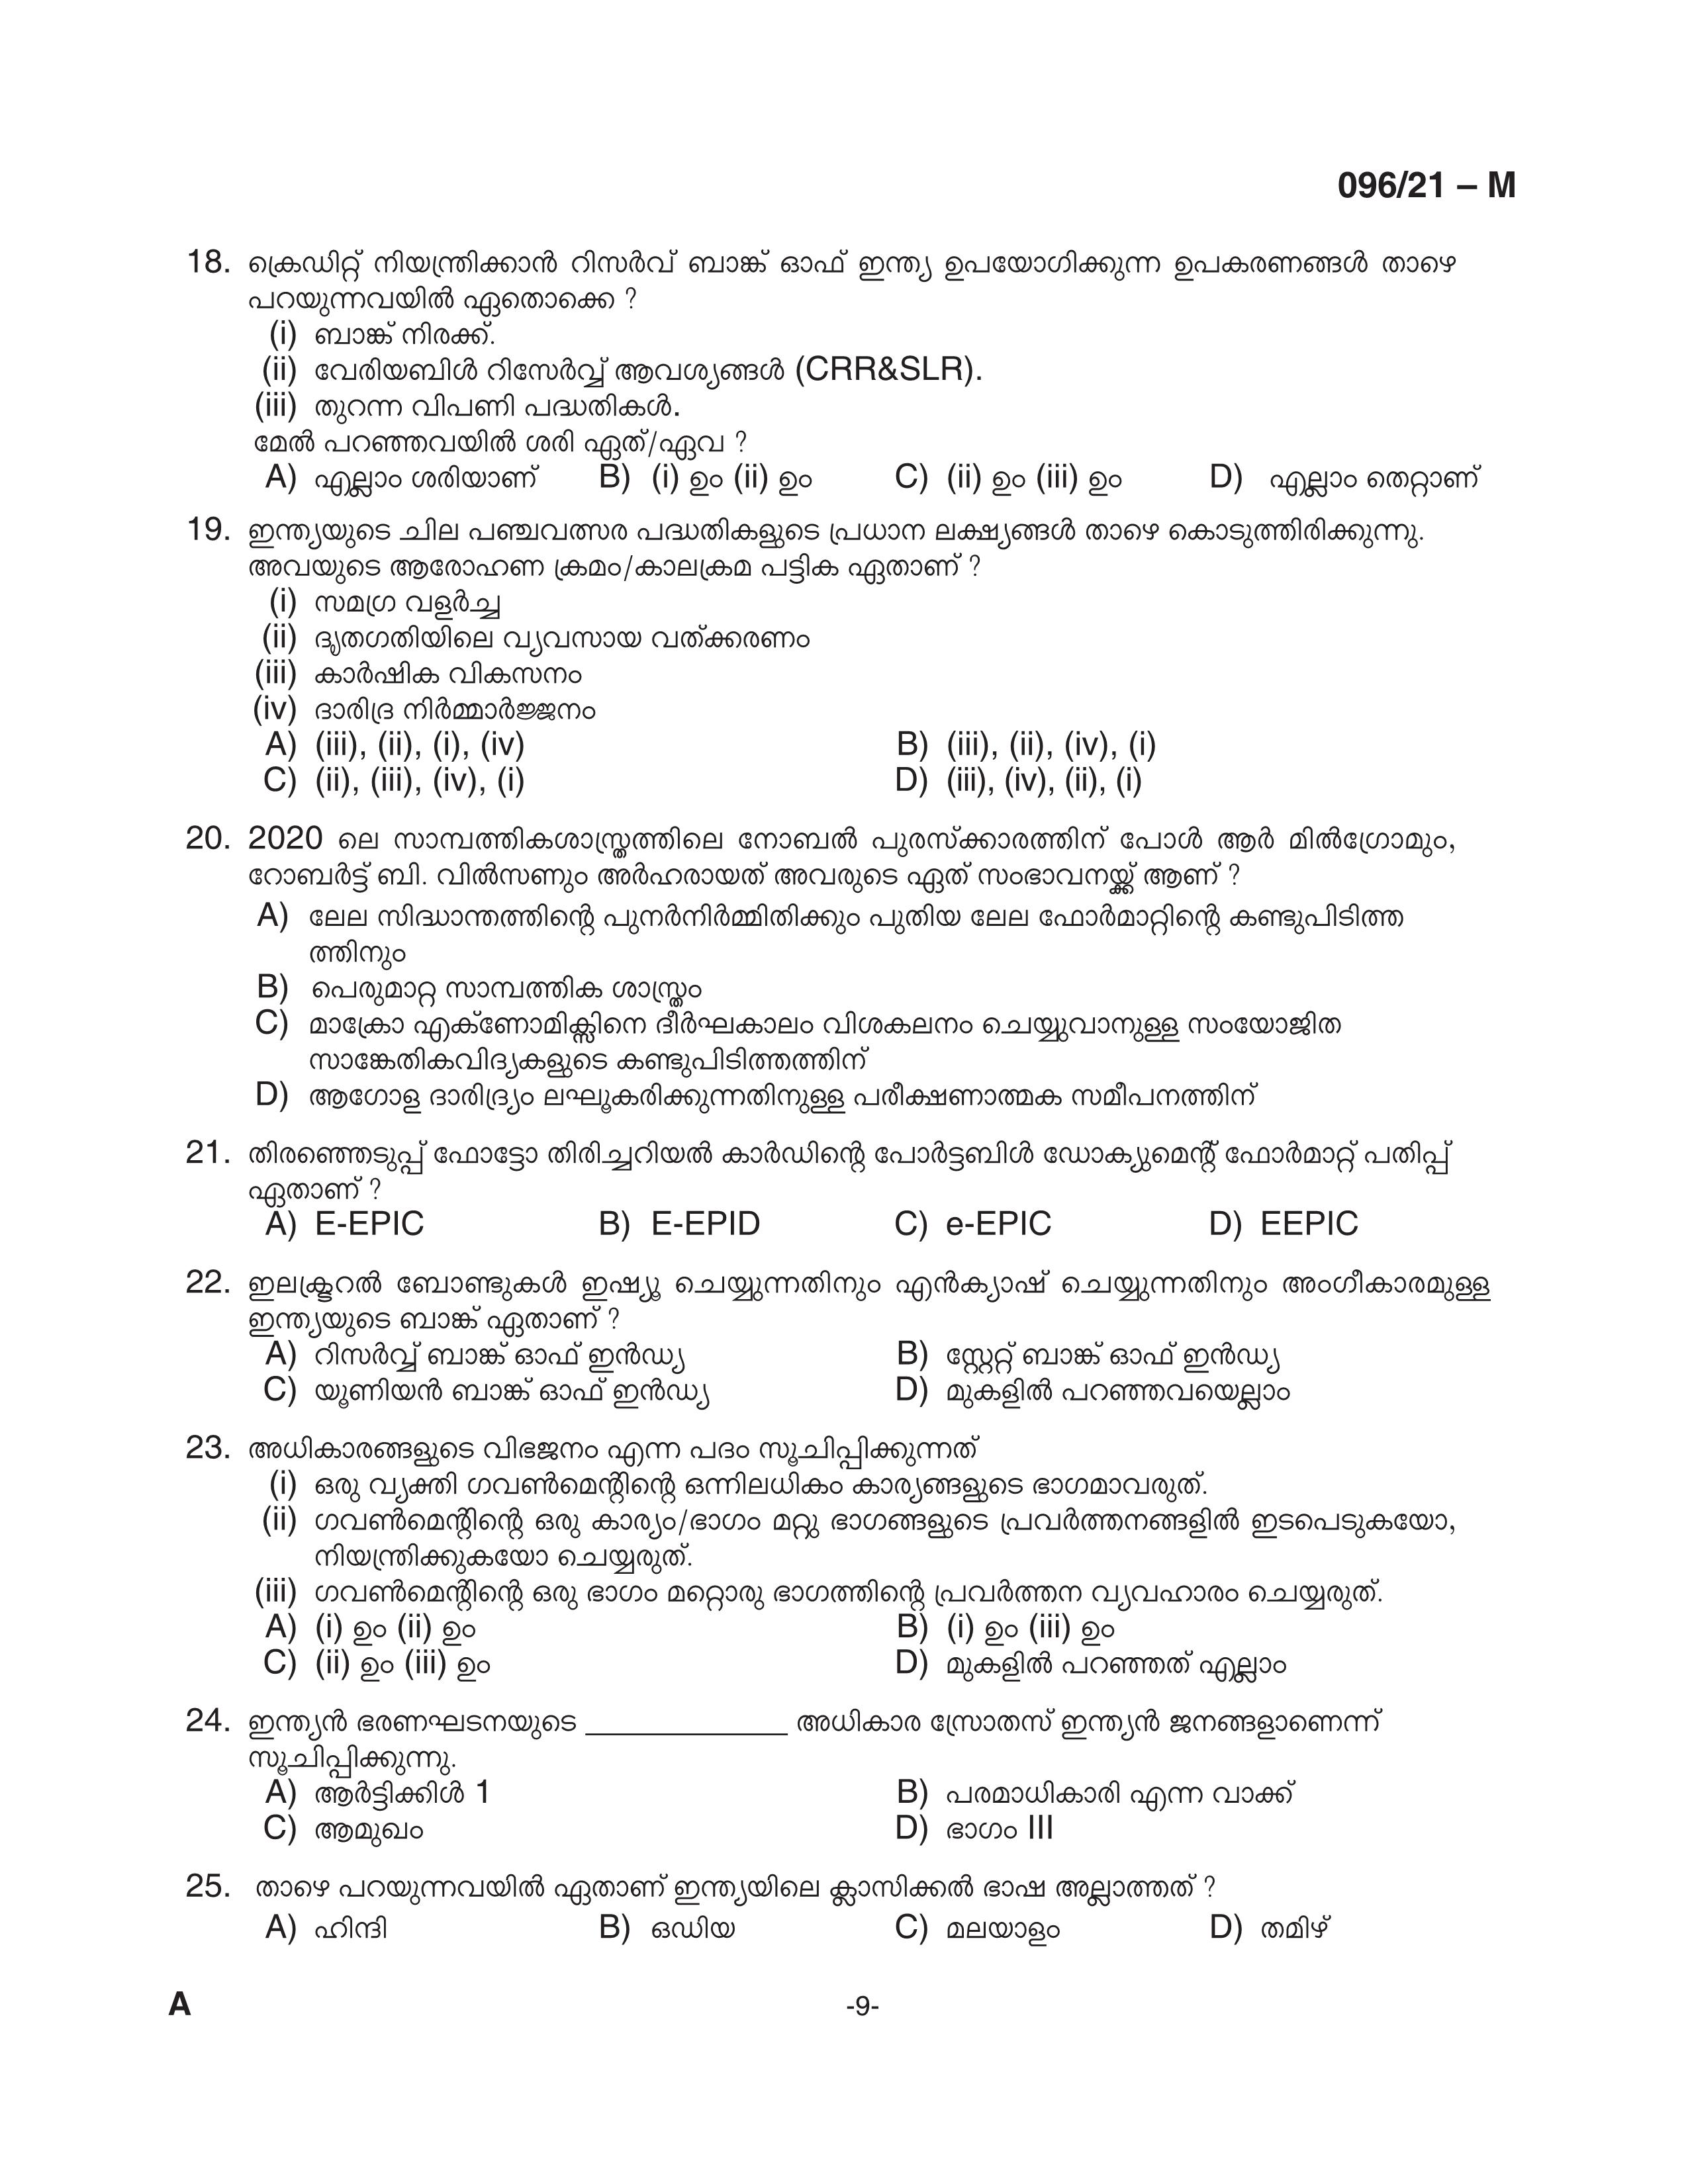 KPSC Degree Level Preliminary Exam Stage II Malayalam 2021 Code 09621 M 9